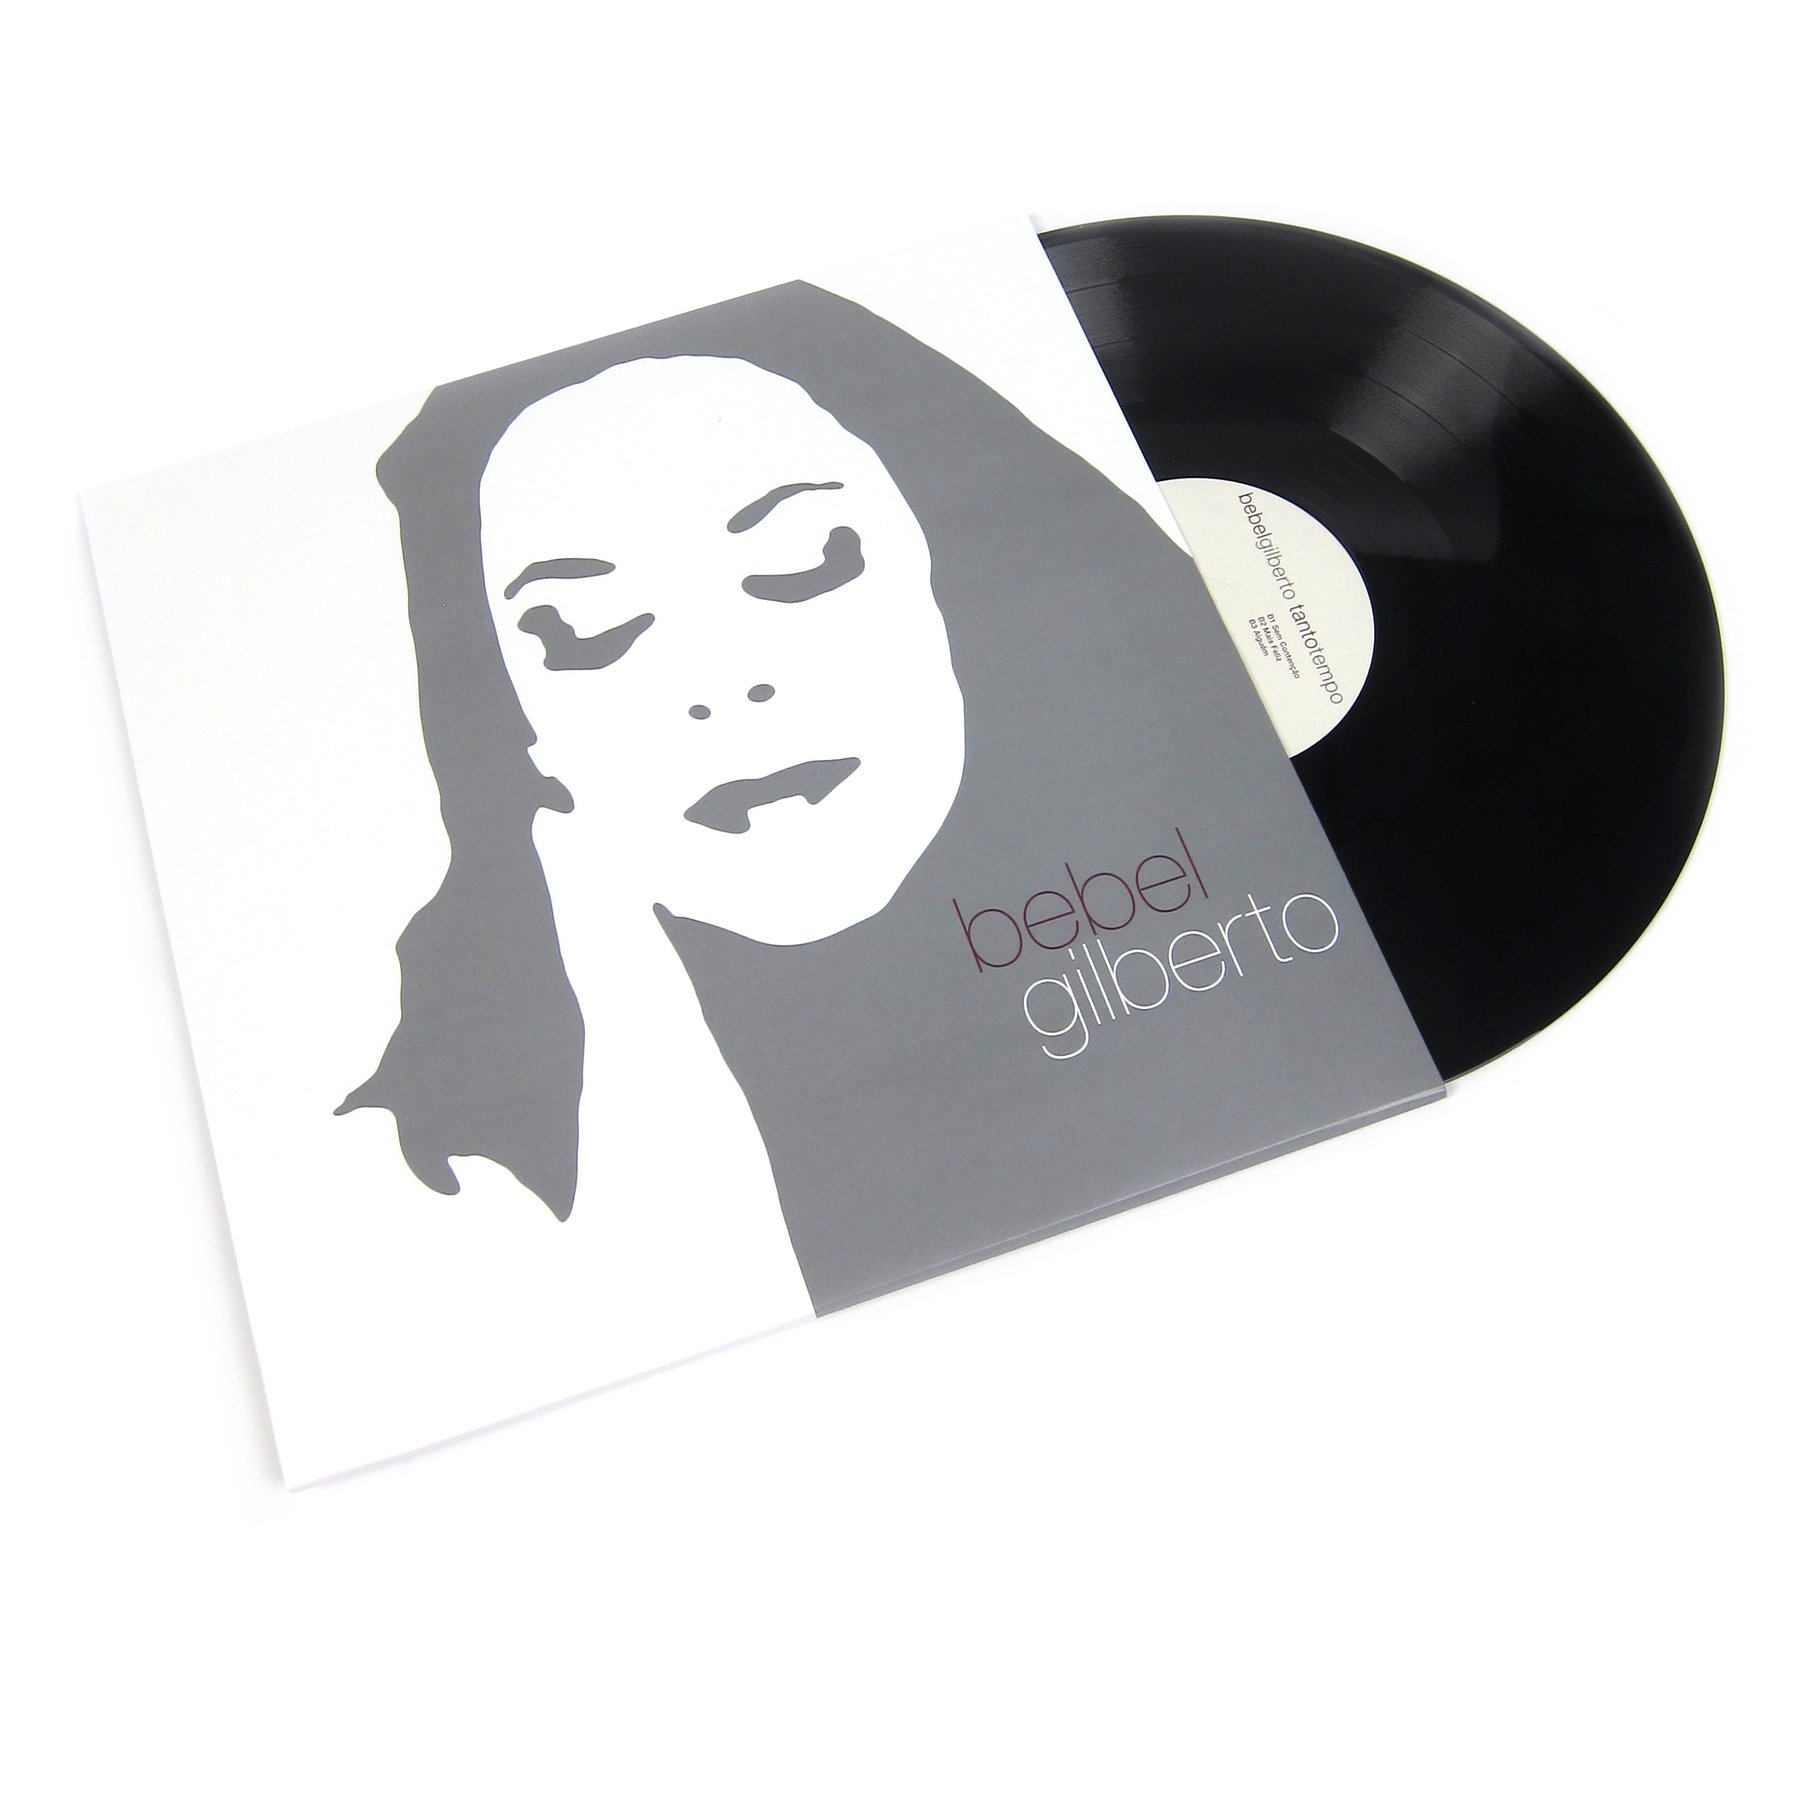 Bebel Gilberto: Tanto Tempo Vinyl 2LP – TurntableLab.com